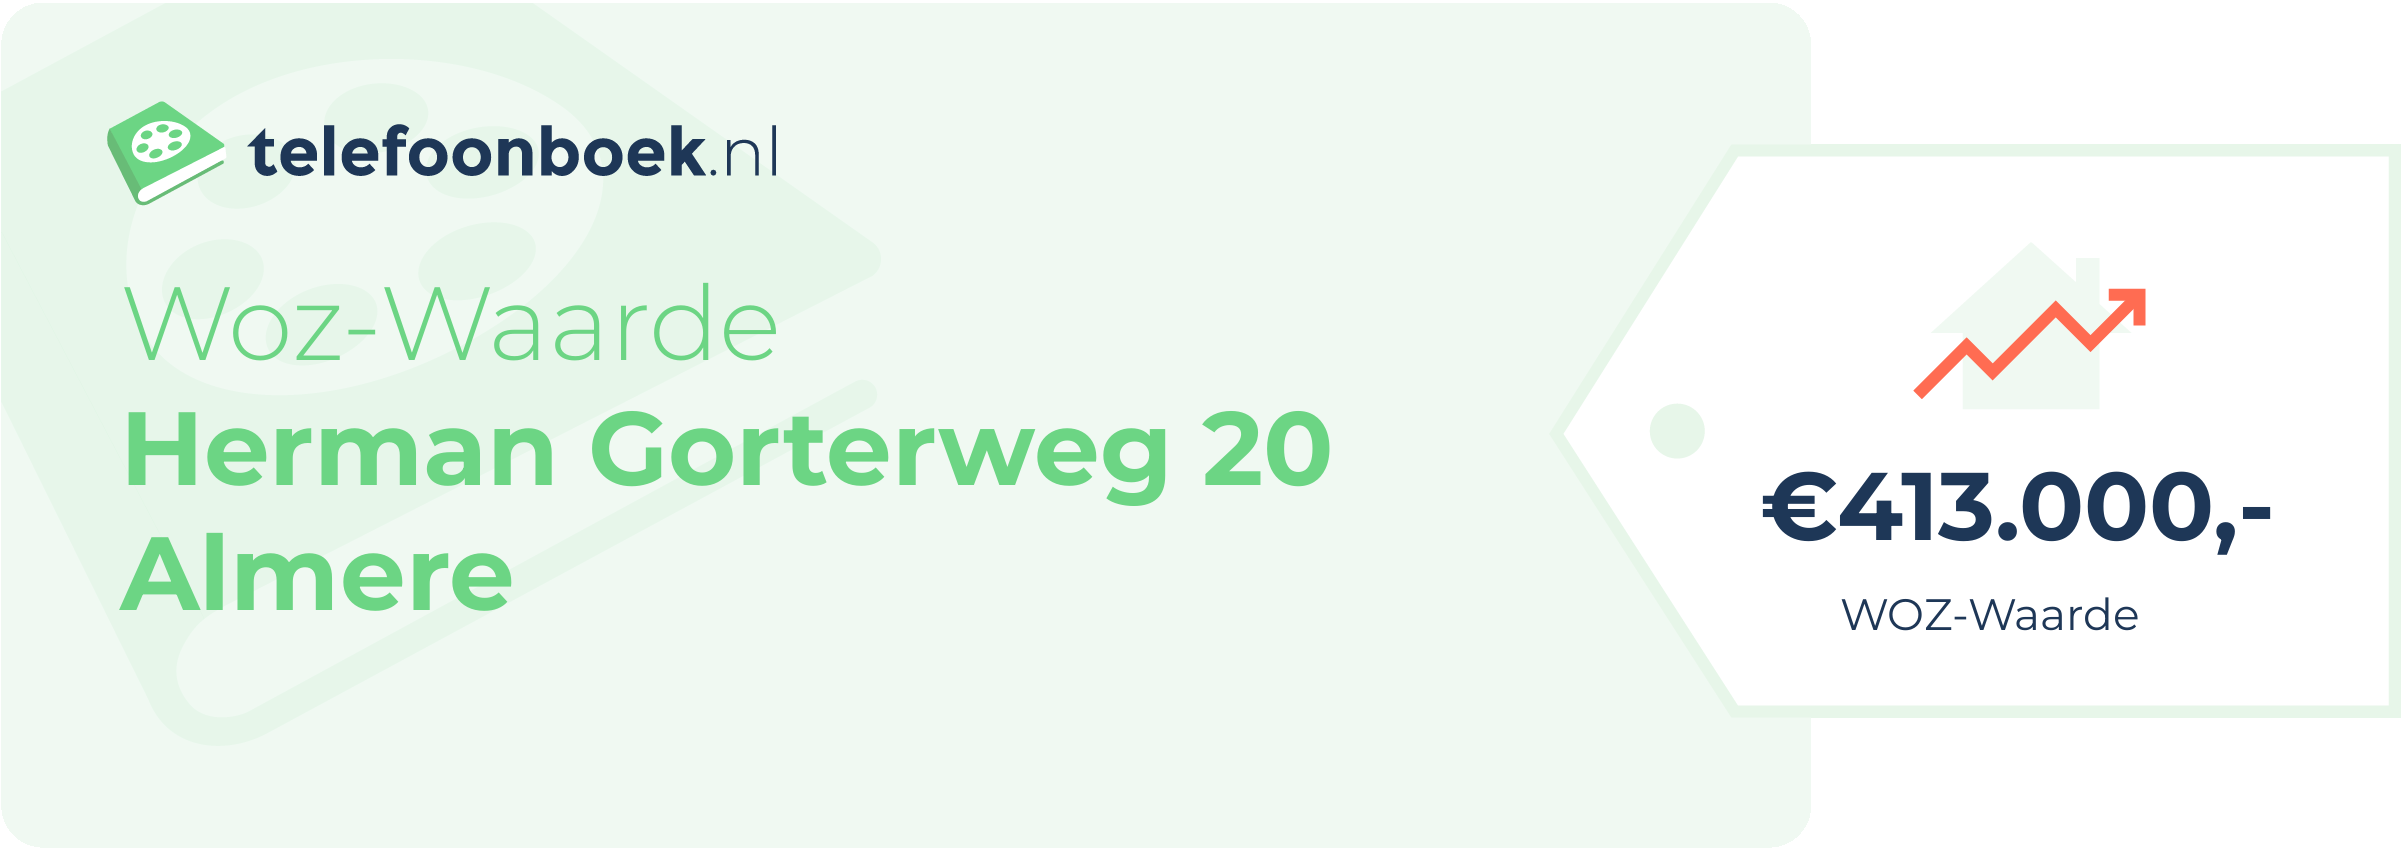 WOZ-waarde Herman Gorterweg 20 Almere